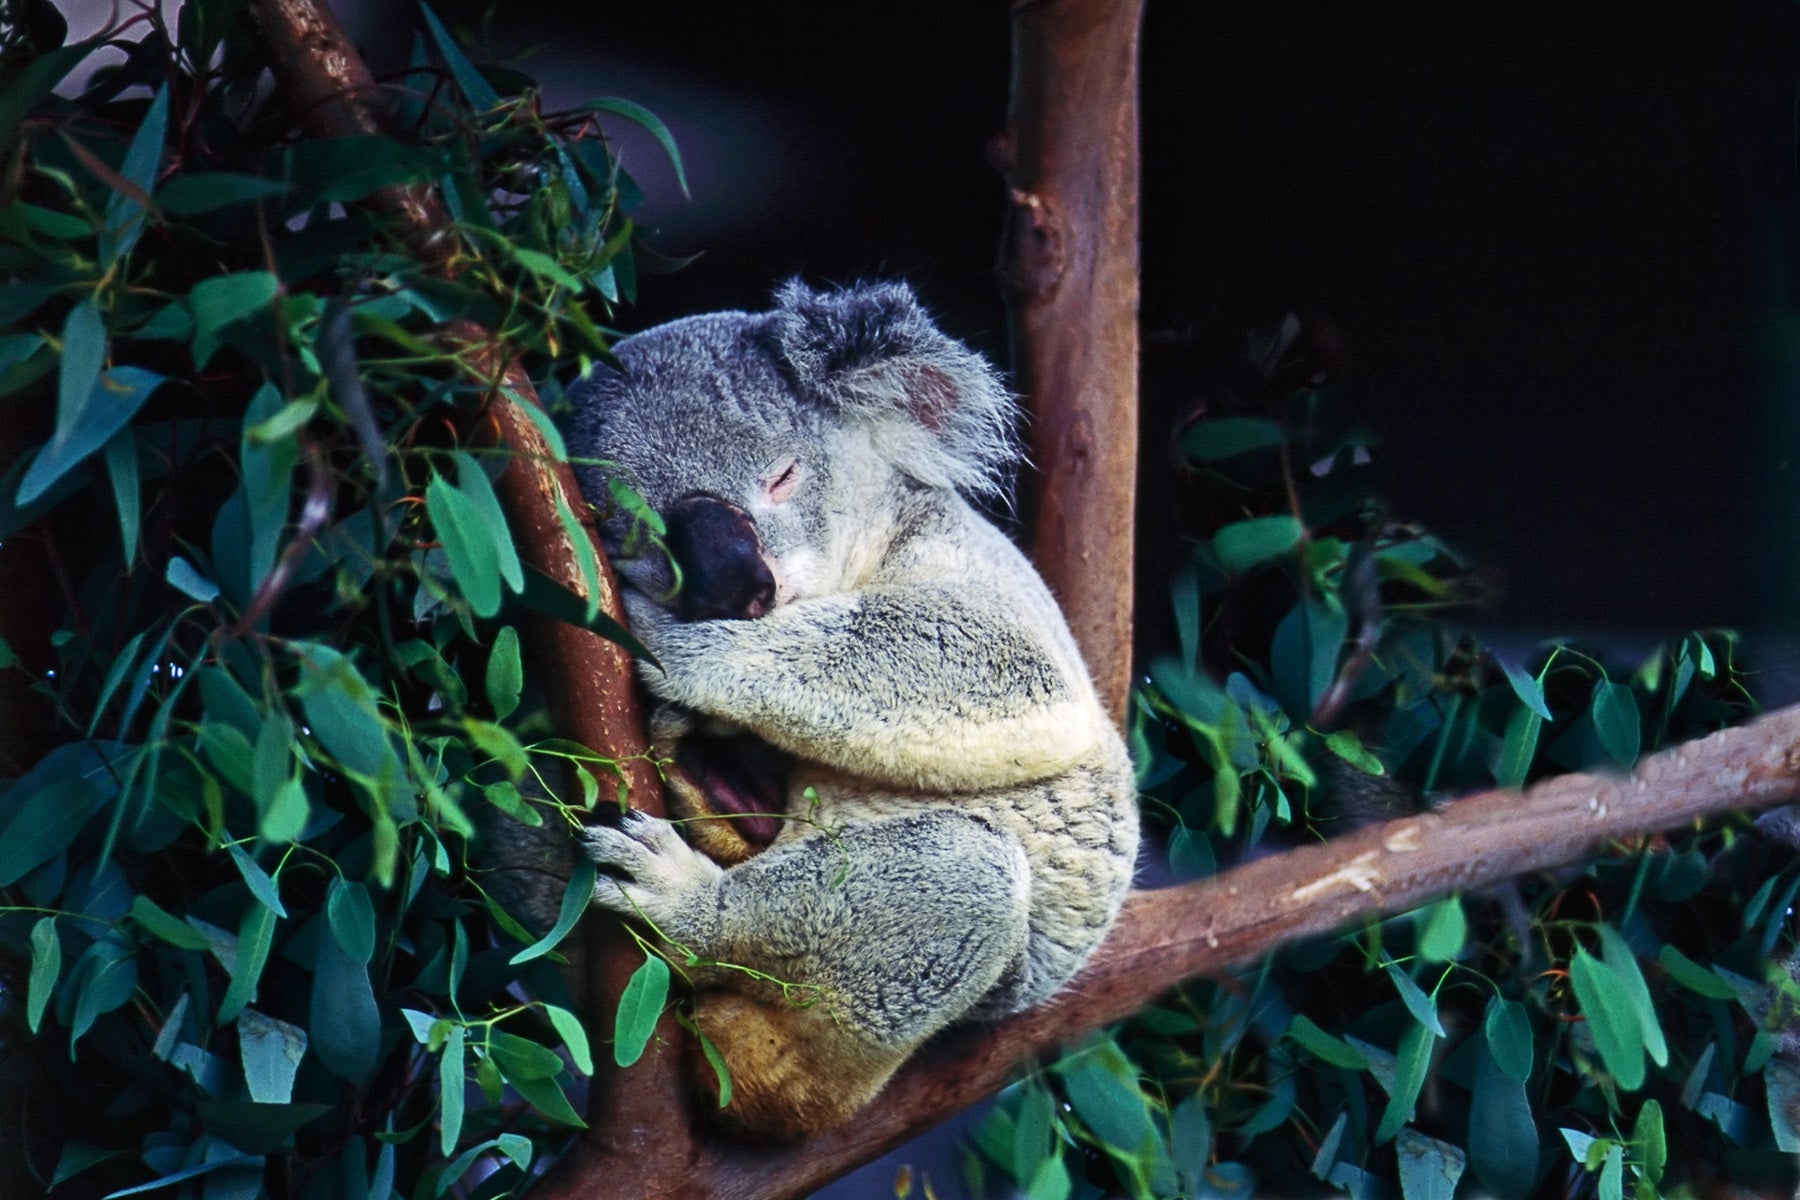 Koala-ty facts about koalas, Cleveland Zoological Society